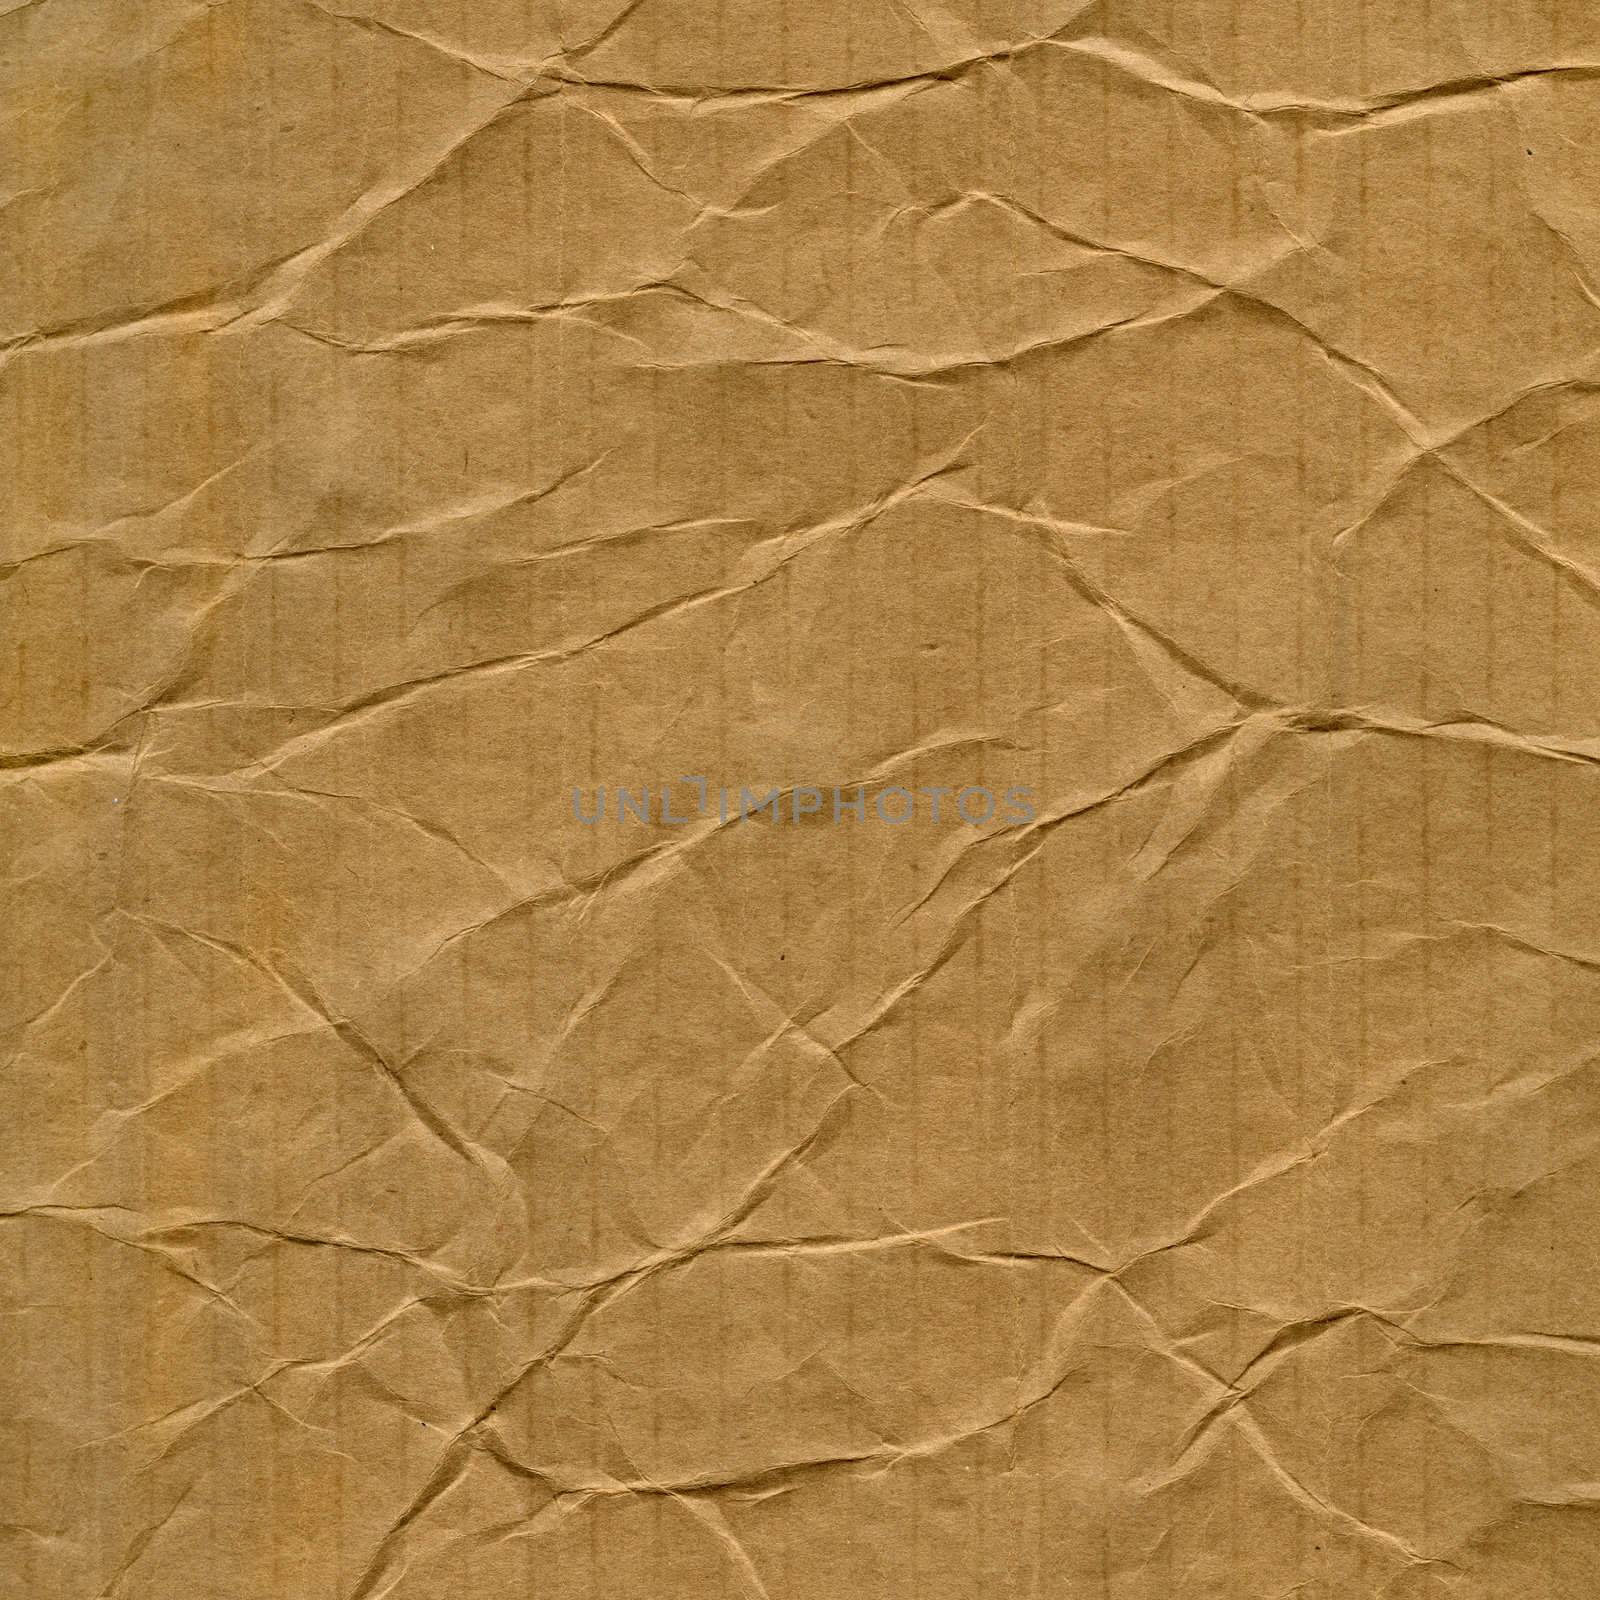 crumpled cardboard texture by PixelsAway